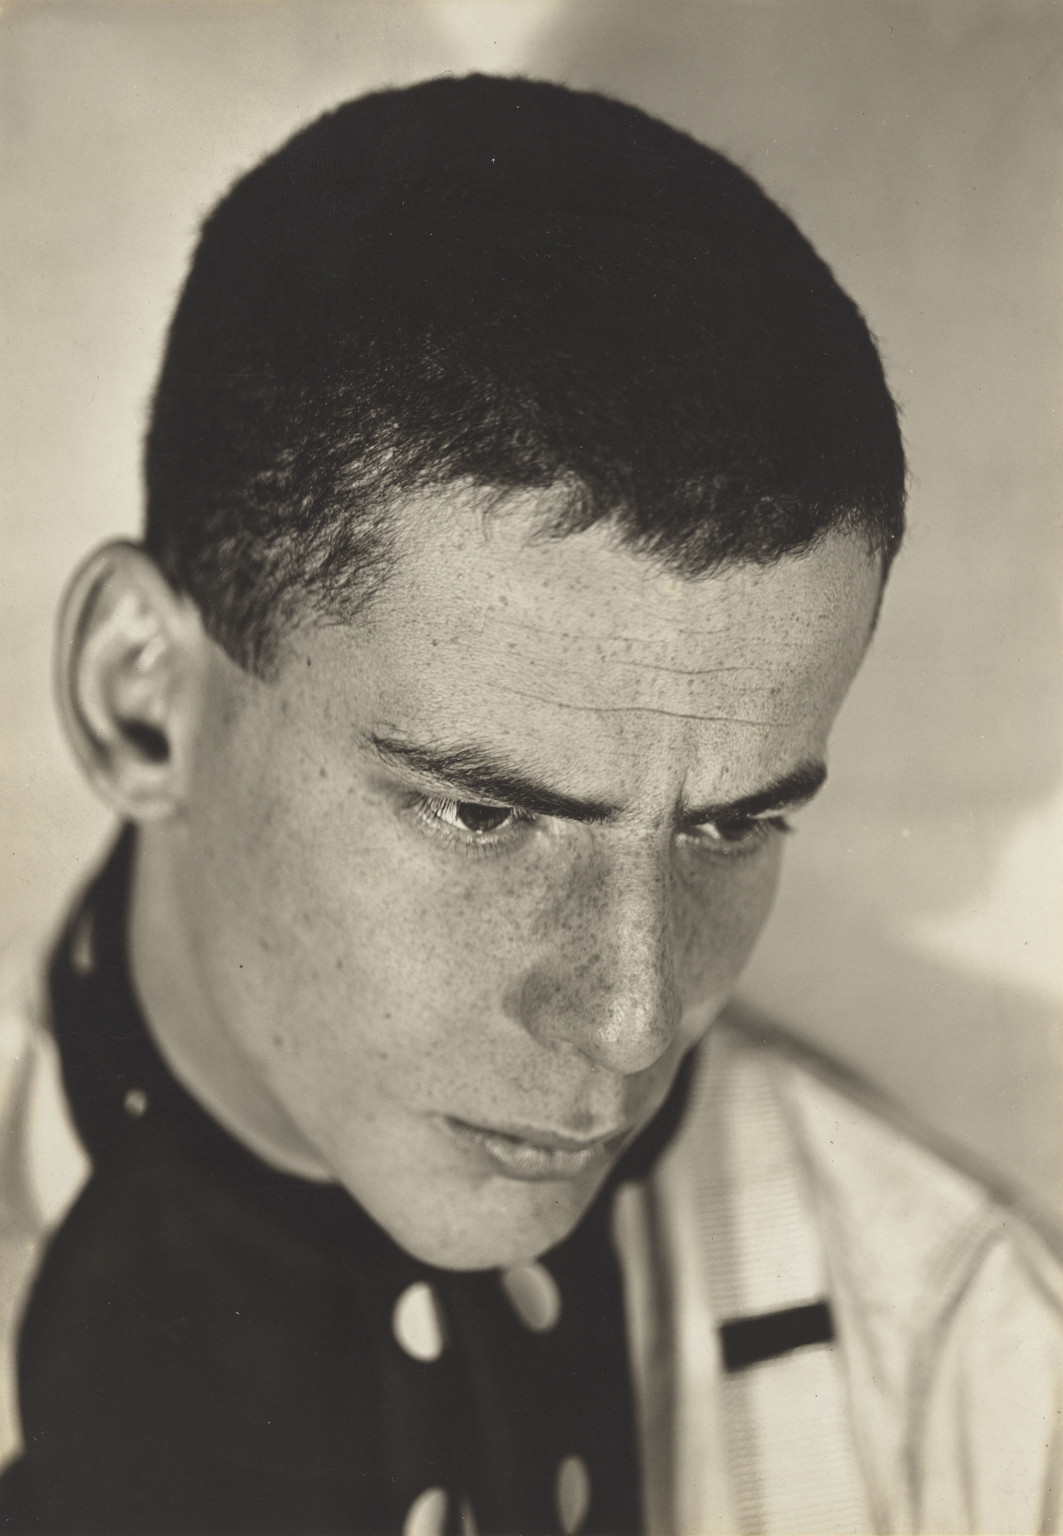 Walker Evans (American, 1903–1975). Lincoln Kirstein.c. 1931. Gelatin silver print. 6 3/8 x 4 1/2" (16.2 x 11.4 cm). Gift of the artist © 2019 Walker Evans Archive, The Metropolitan Museum of Art